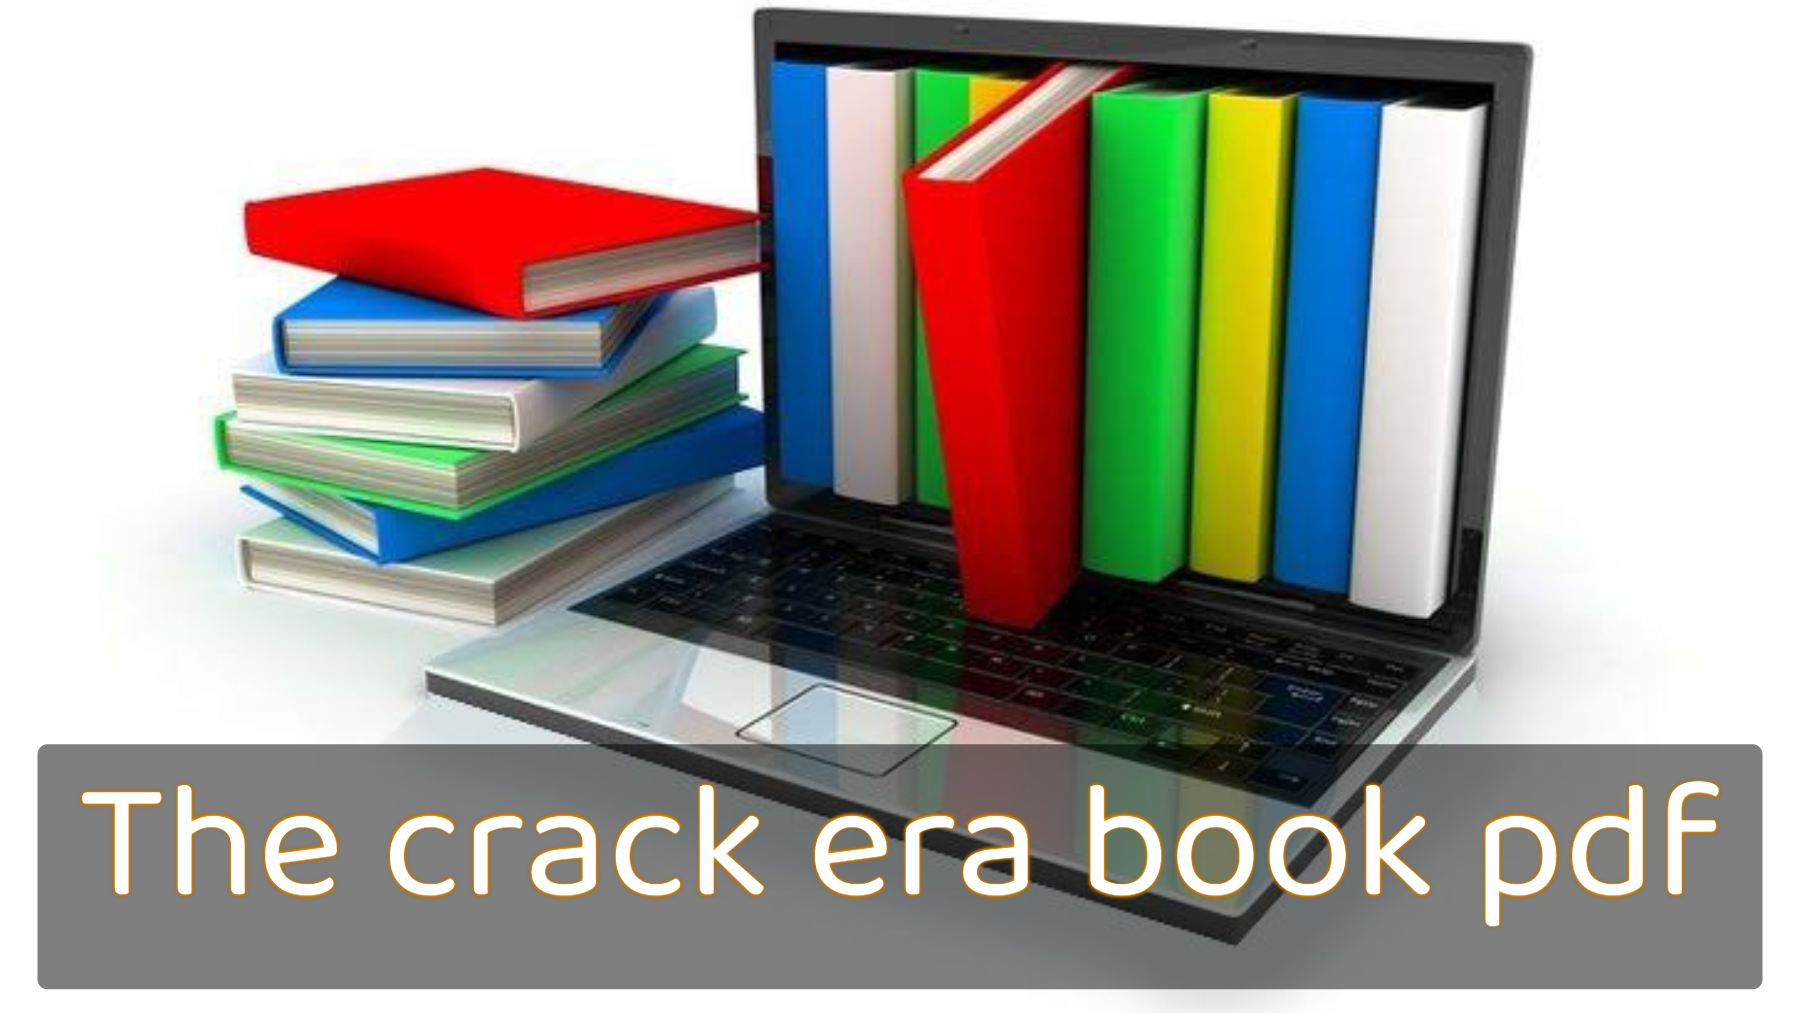 The crack era book pdf, The crack era audiobook, The crack era book pdf downolad, The crack era pdf